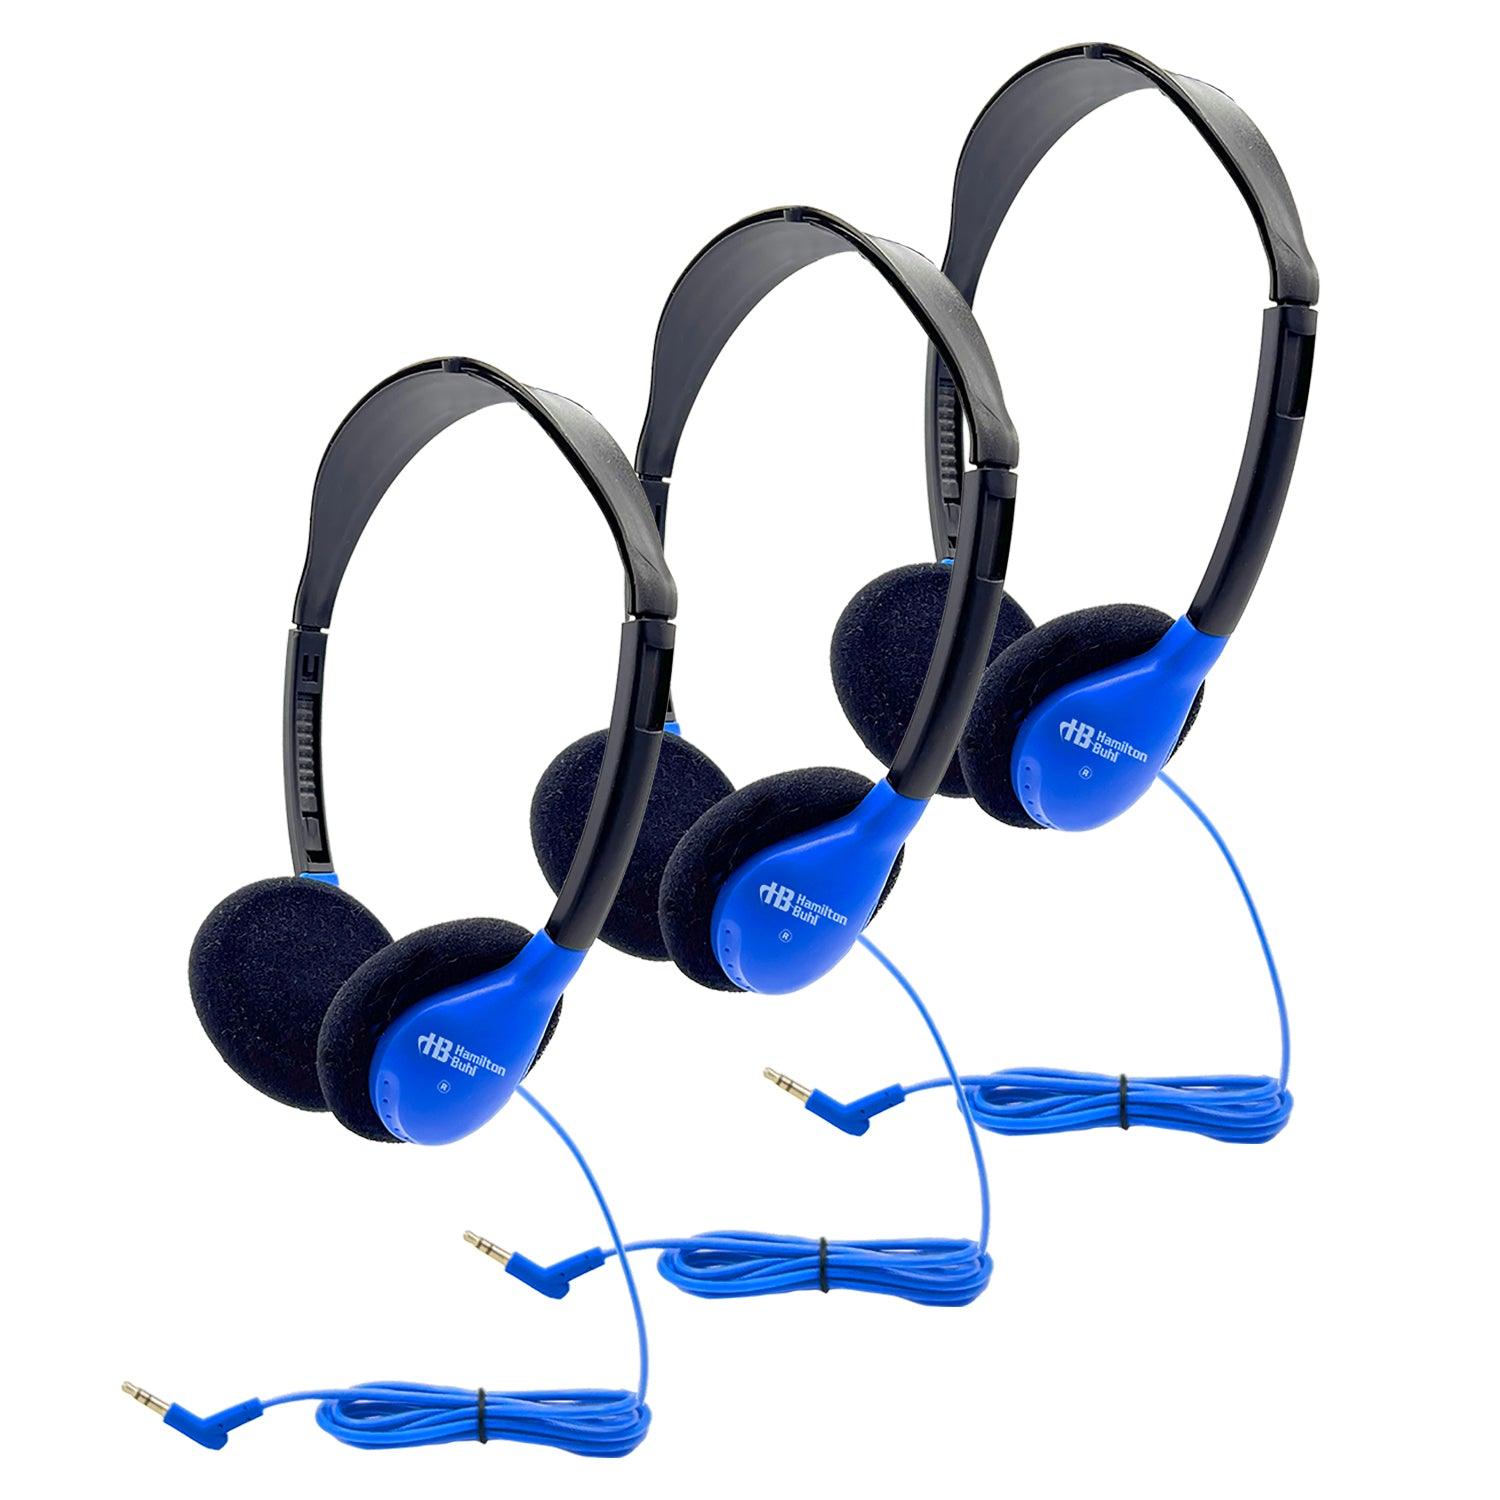 Personal On-Ear Stereo Headphone, Blue, Pack of 3 - Loomini